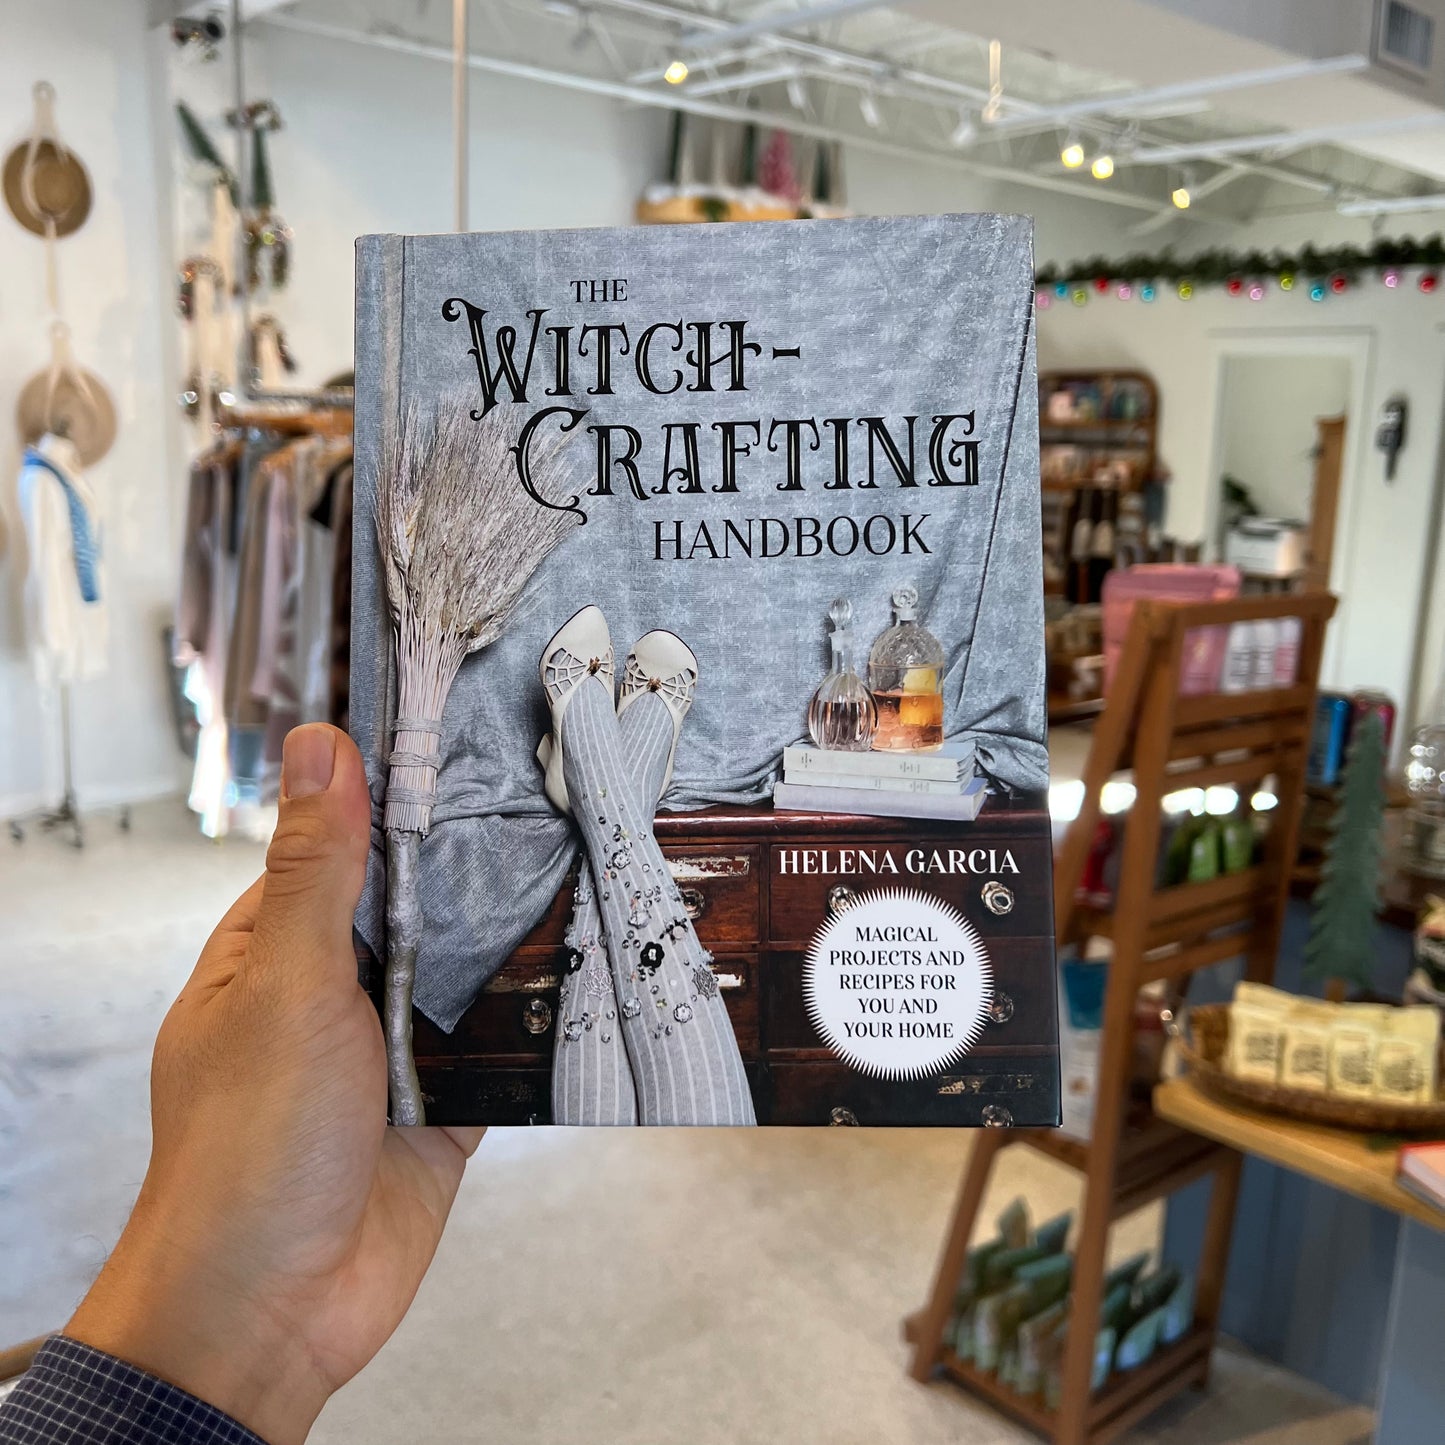 The WitchCrafting Handbook